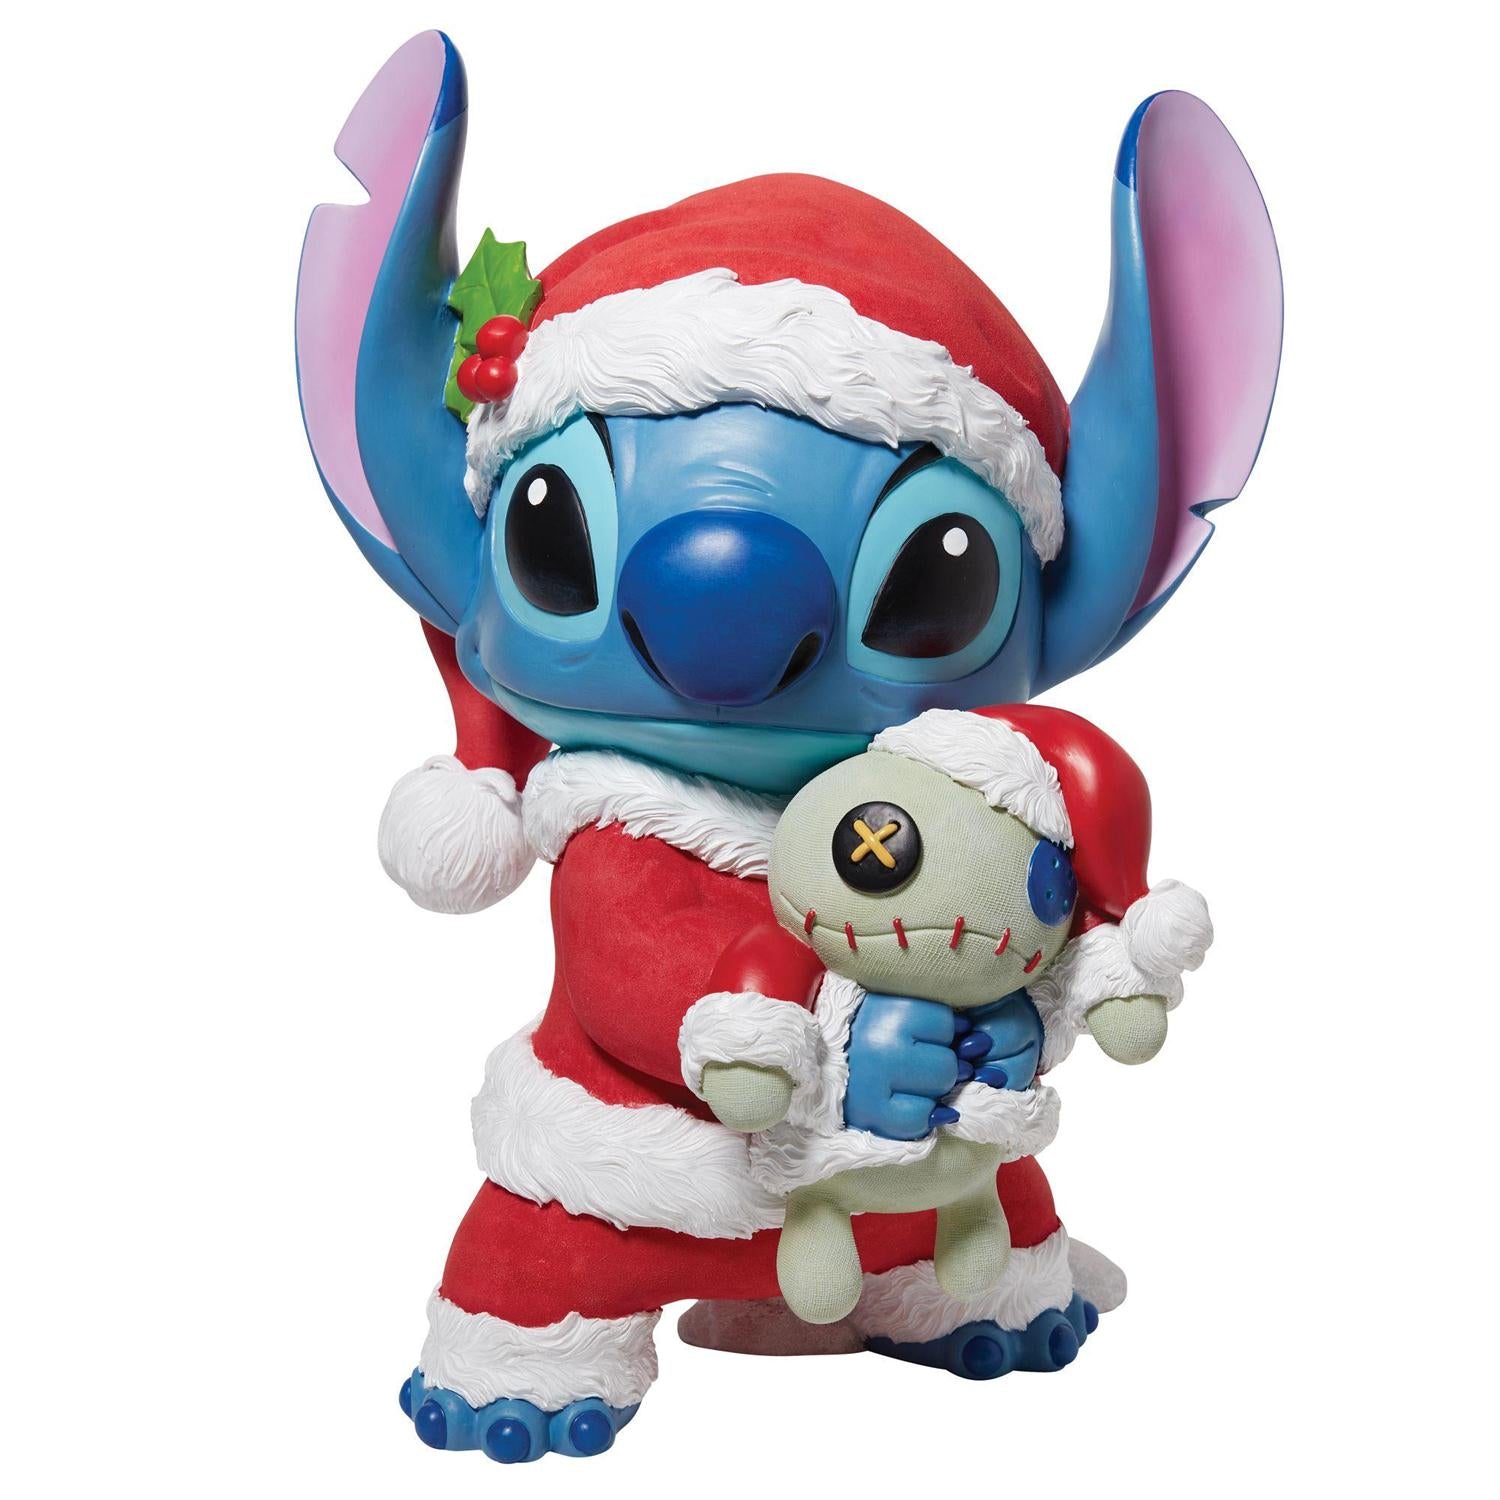  Stitch as Santa holding Lilo's ugly doll.